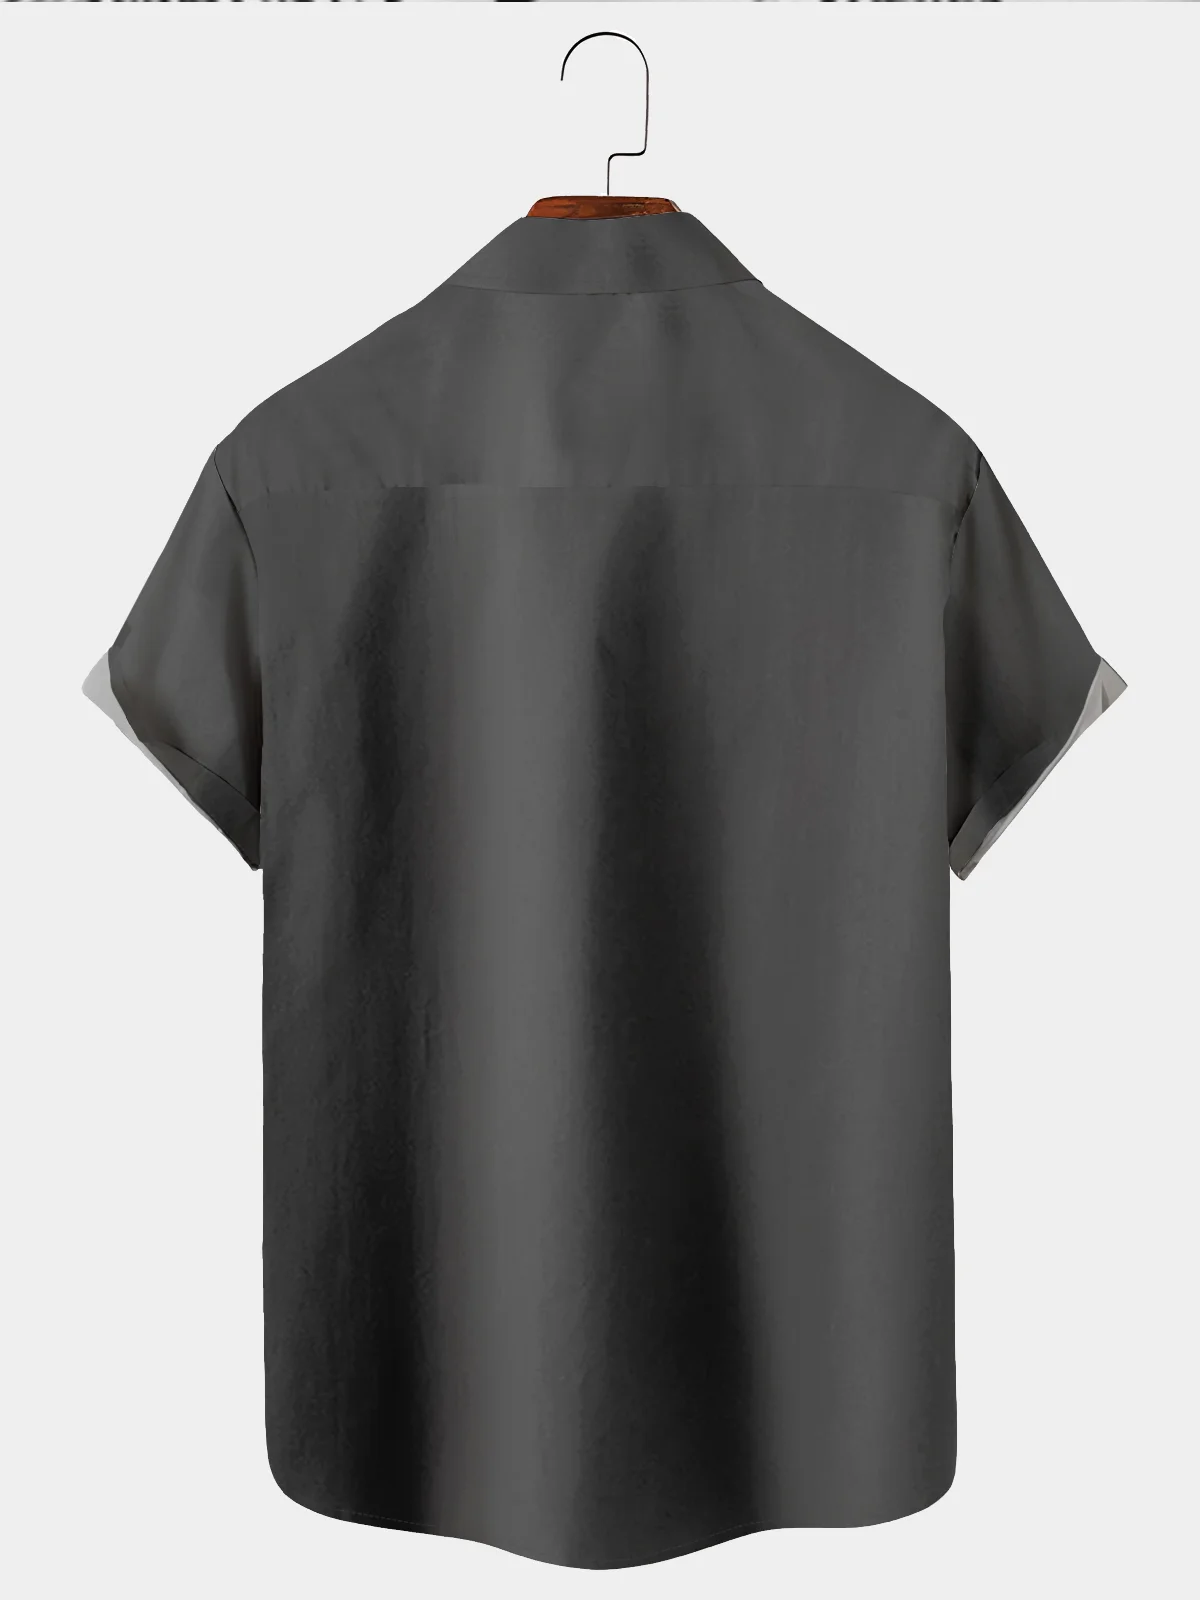 Royaura Hawaiian Coconut Tree Landscape Print Chest Bag Holiday Shirt Plus Size Shirt